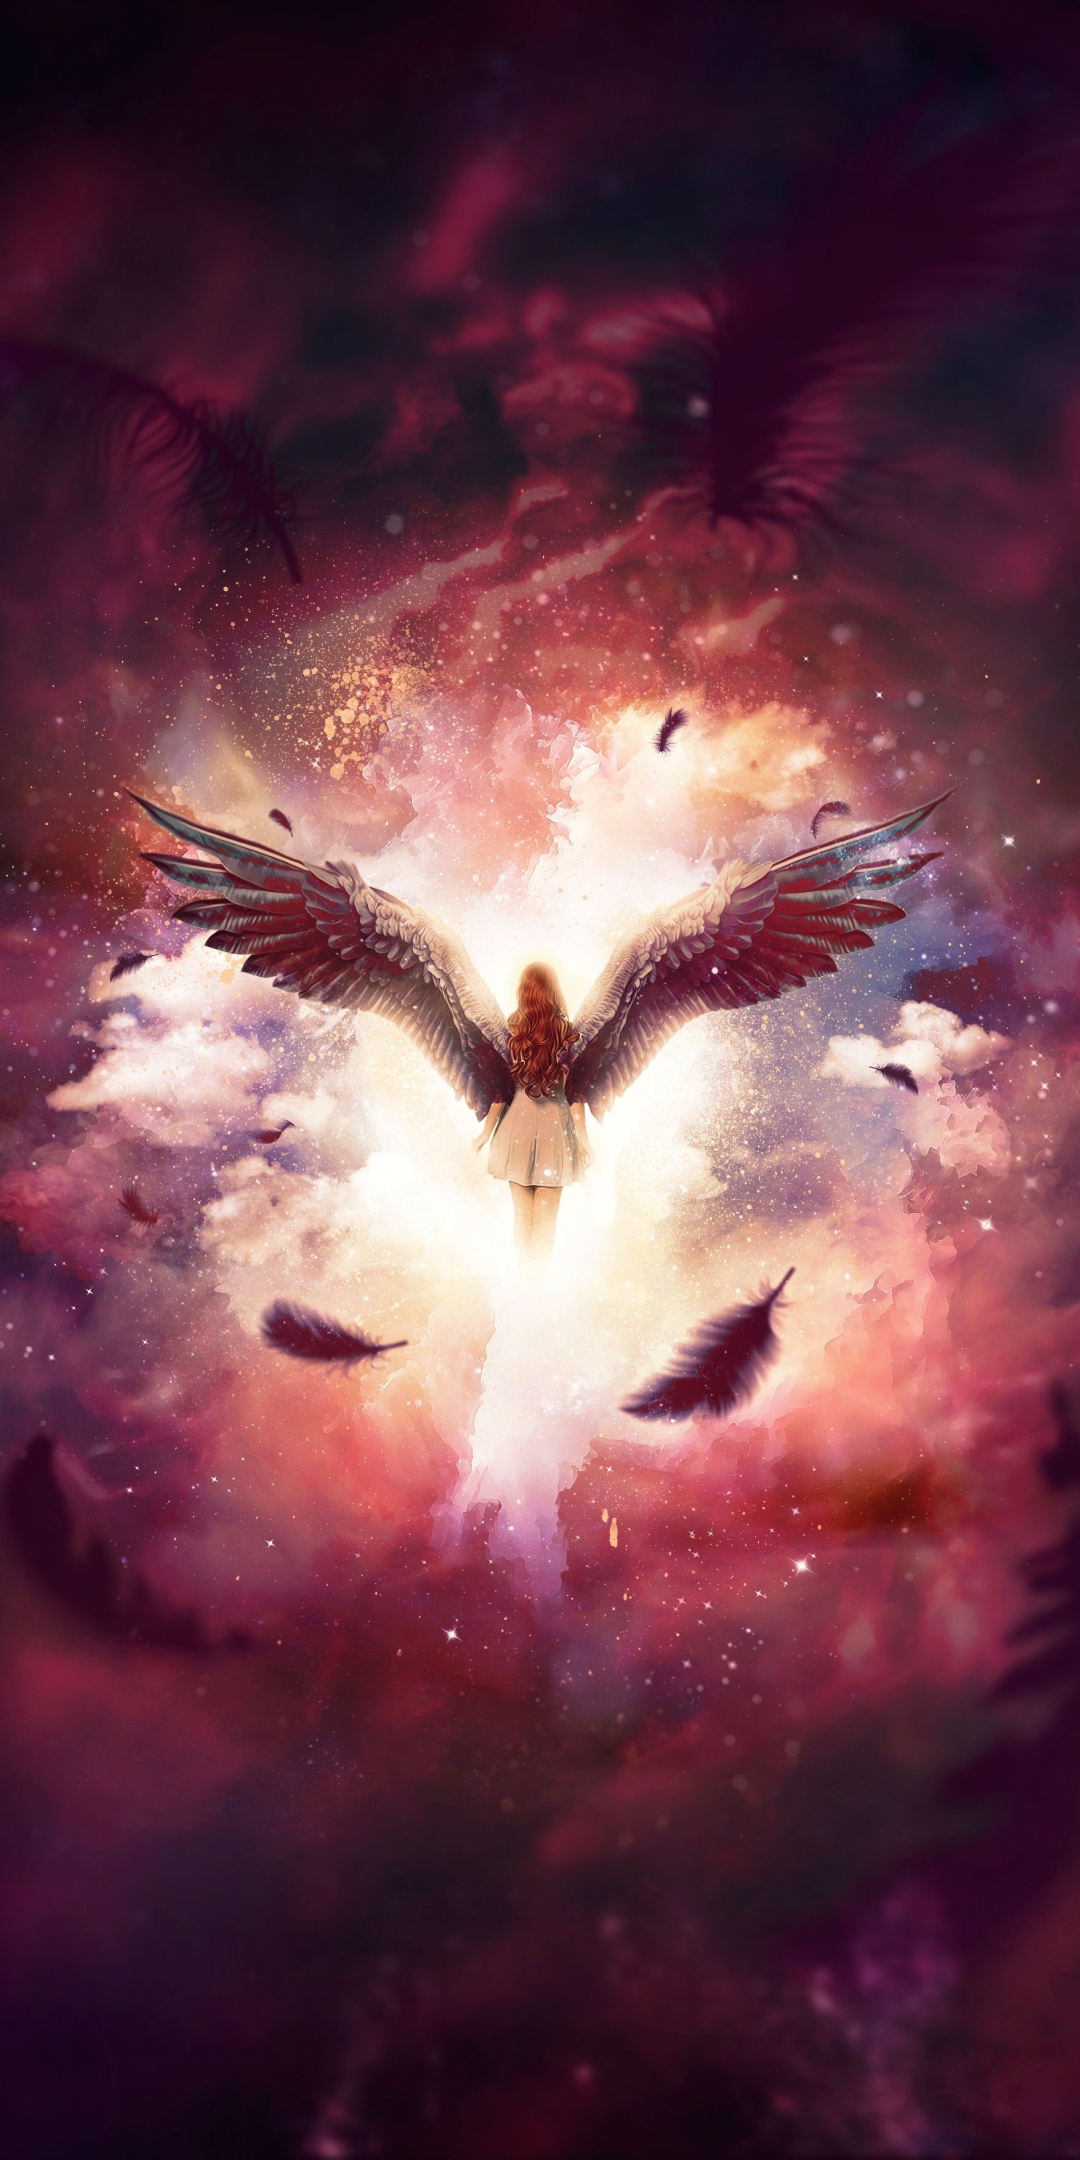 Angel, a fairy in sky, dream, surreal, 1080x2160 wallpaper